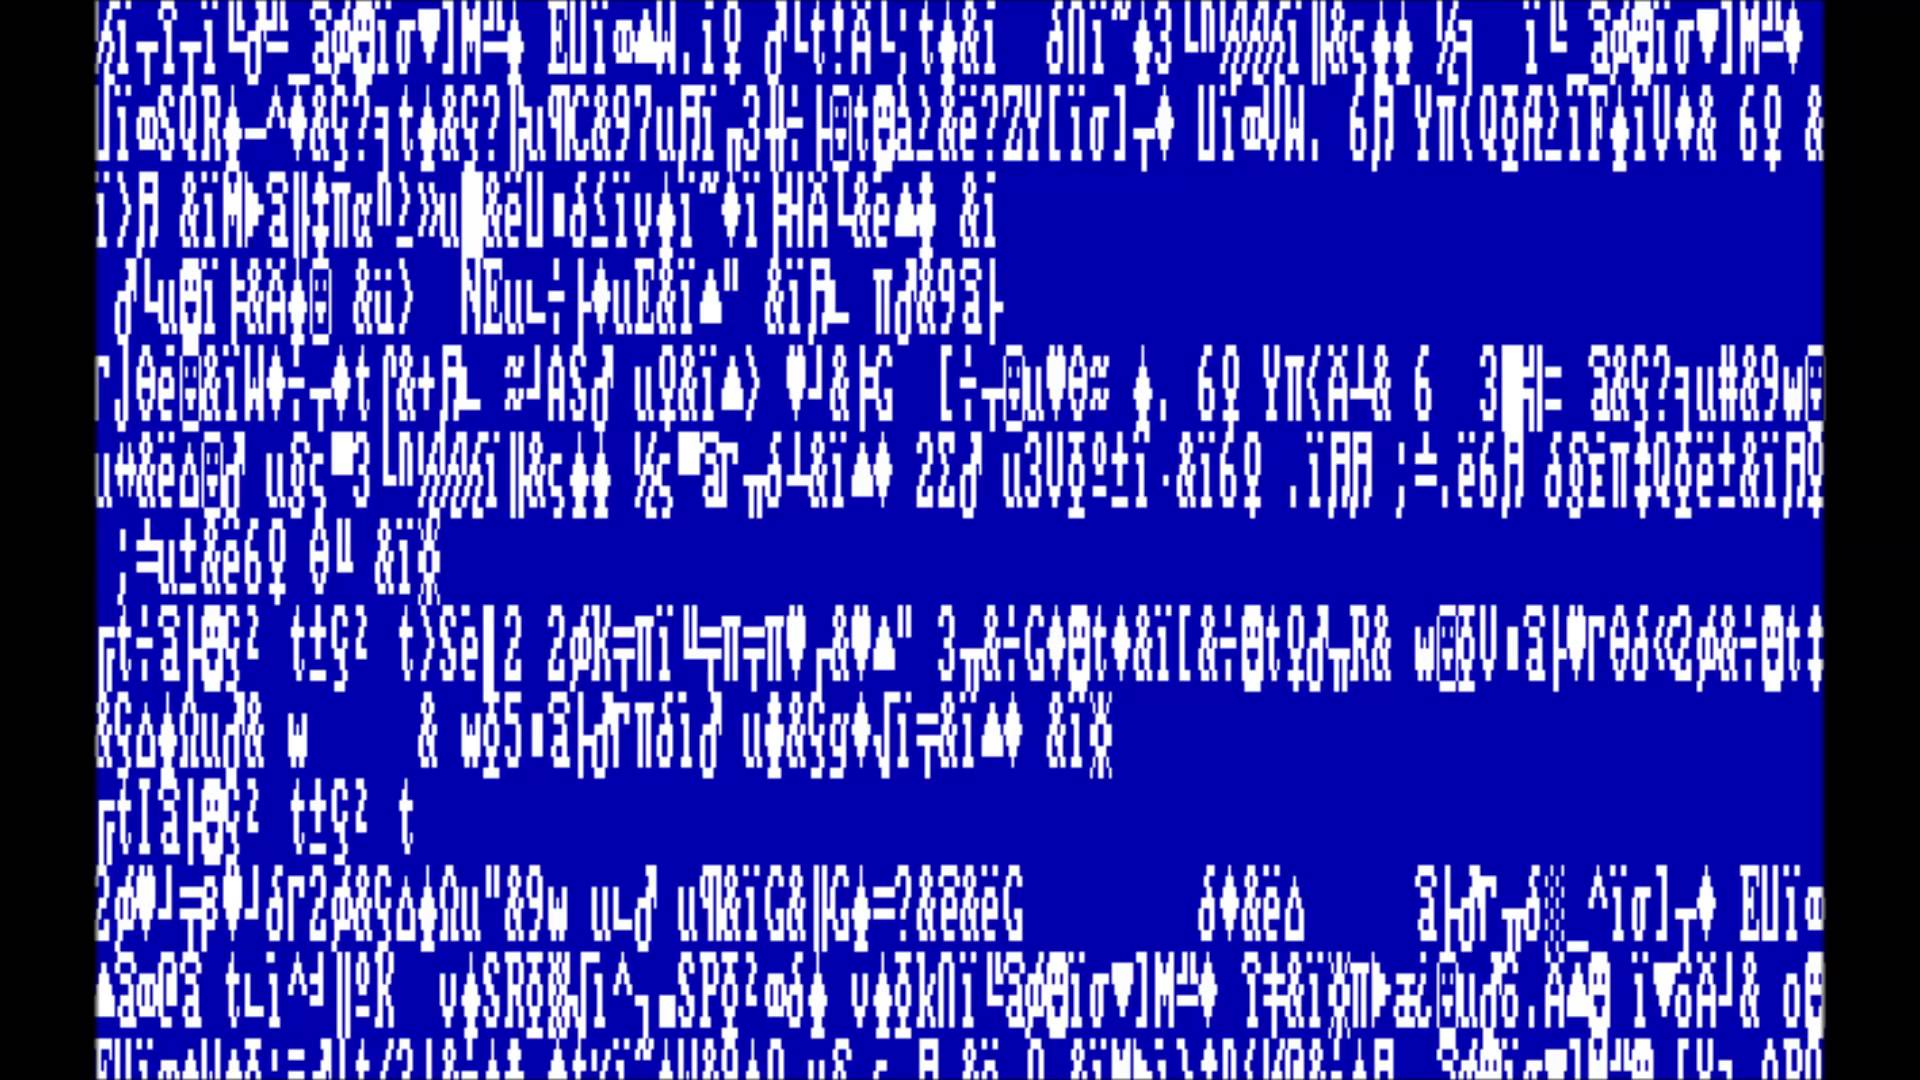 Синей экран xp. Синий экран смерти Windows 1. Экран бсод. Экран смерти на виндовс 1.0. Синий экран смерти Windows 1.0.